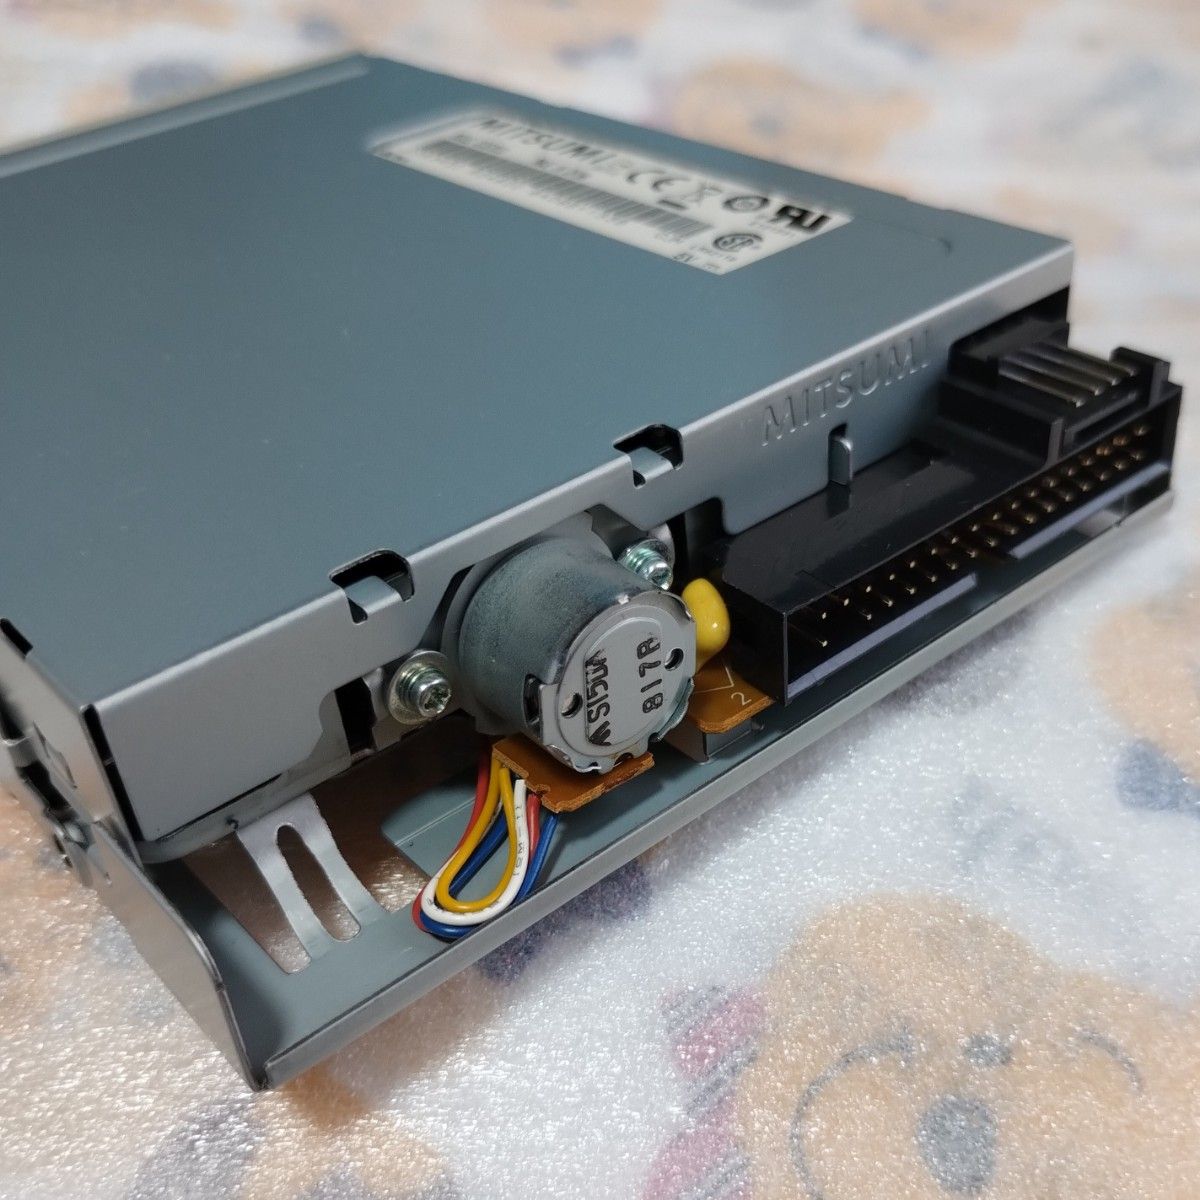 MITSUMI・フロッピーディスクドライブ「D353M3D」★新品・未使用